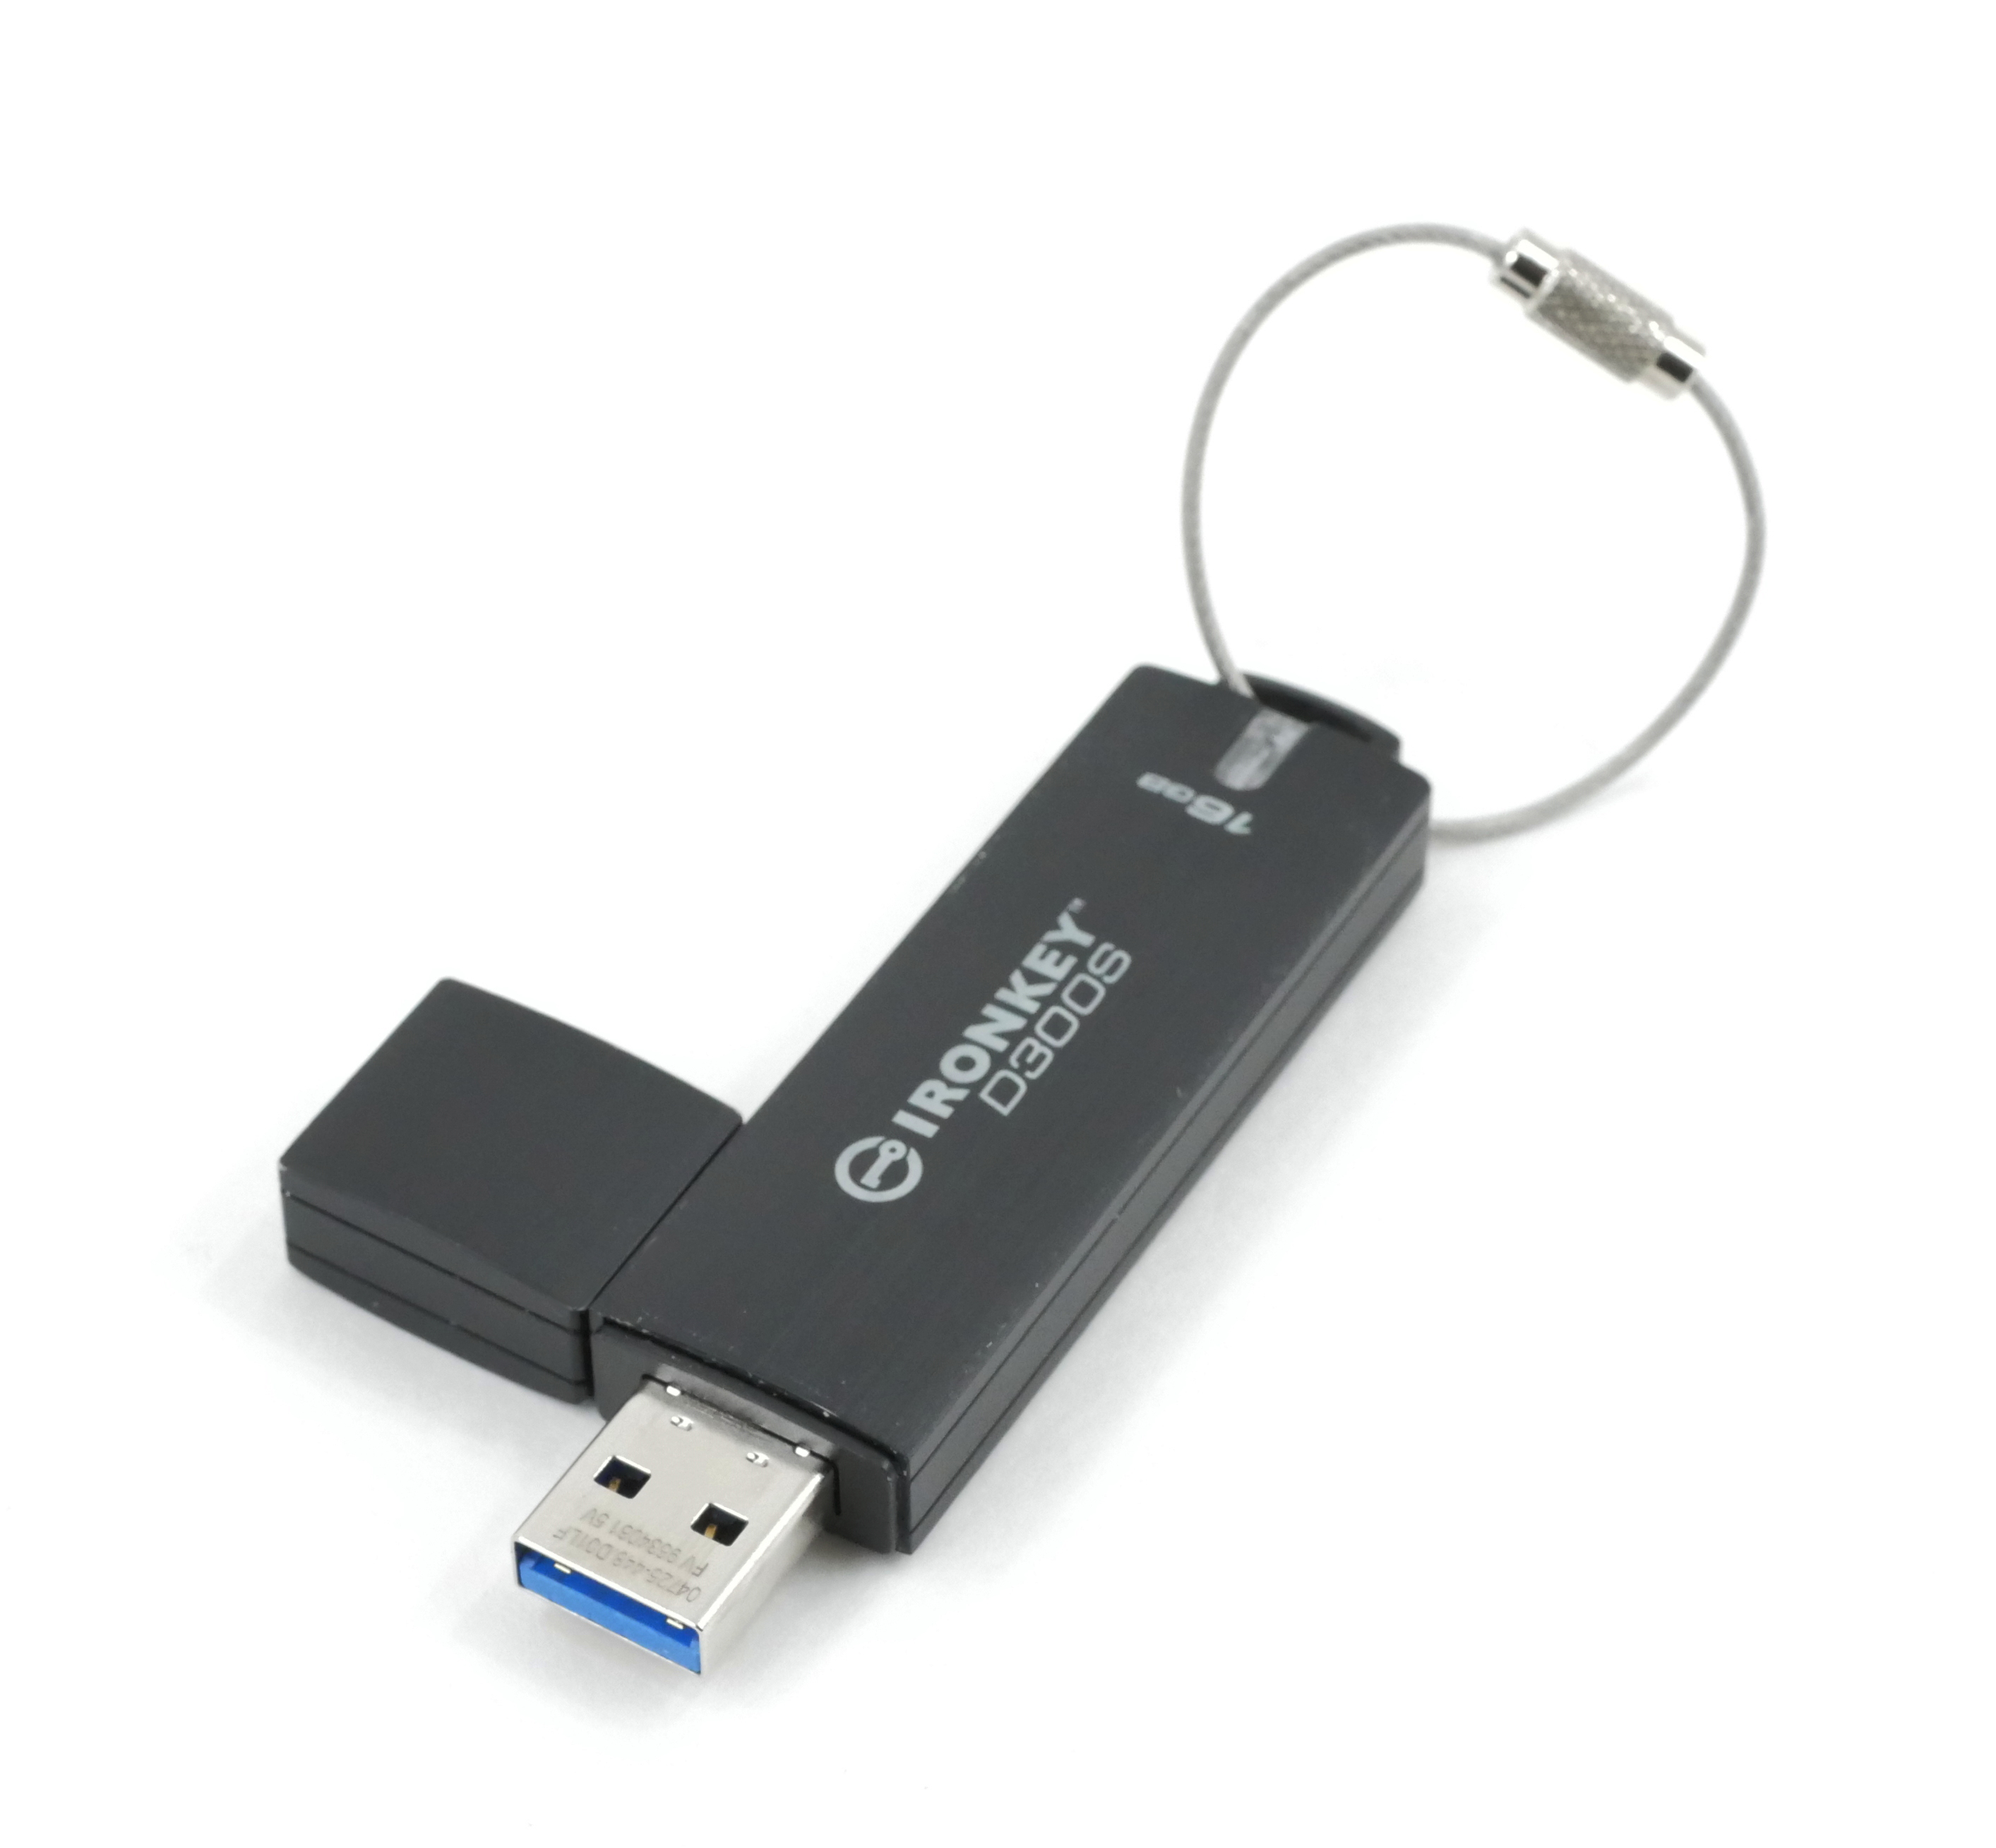 Disque dur externe Western Digital Elements 2TO USB 3.0 - PREMICE